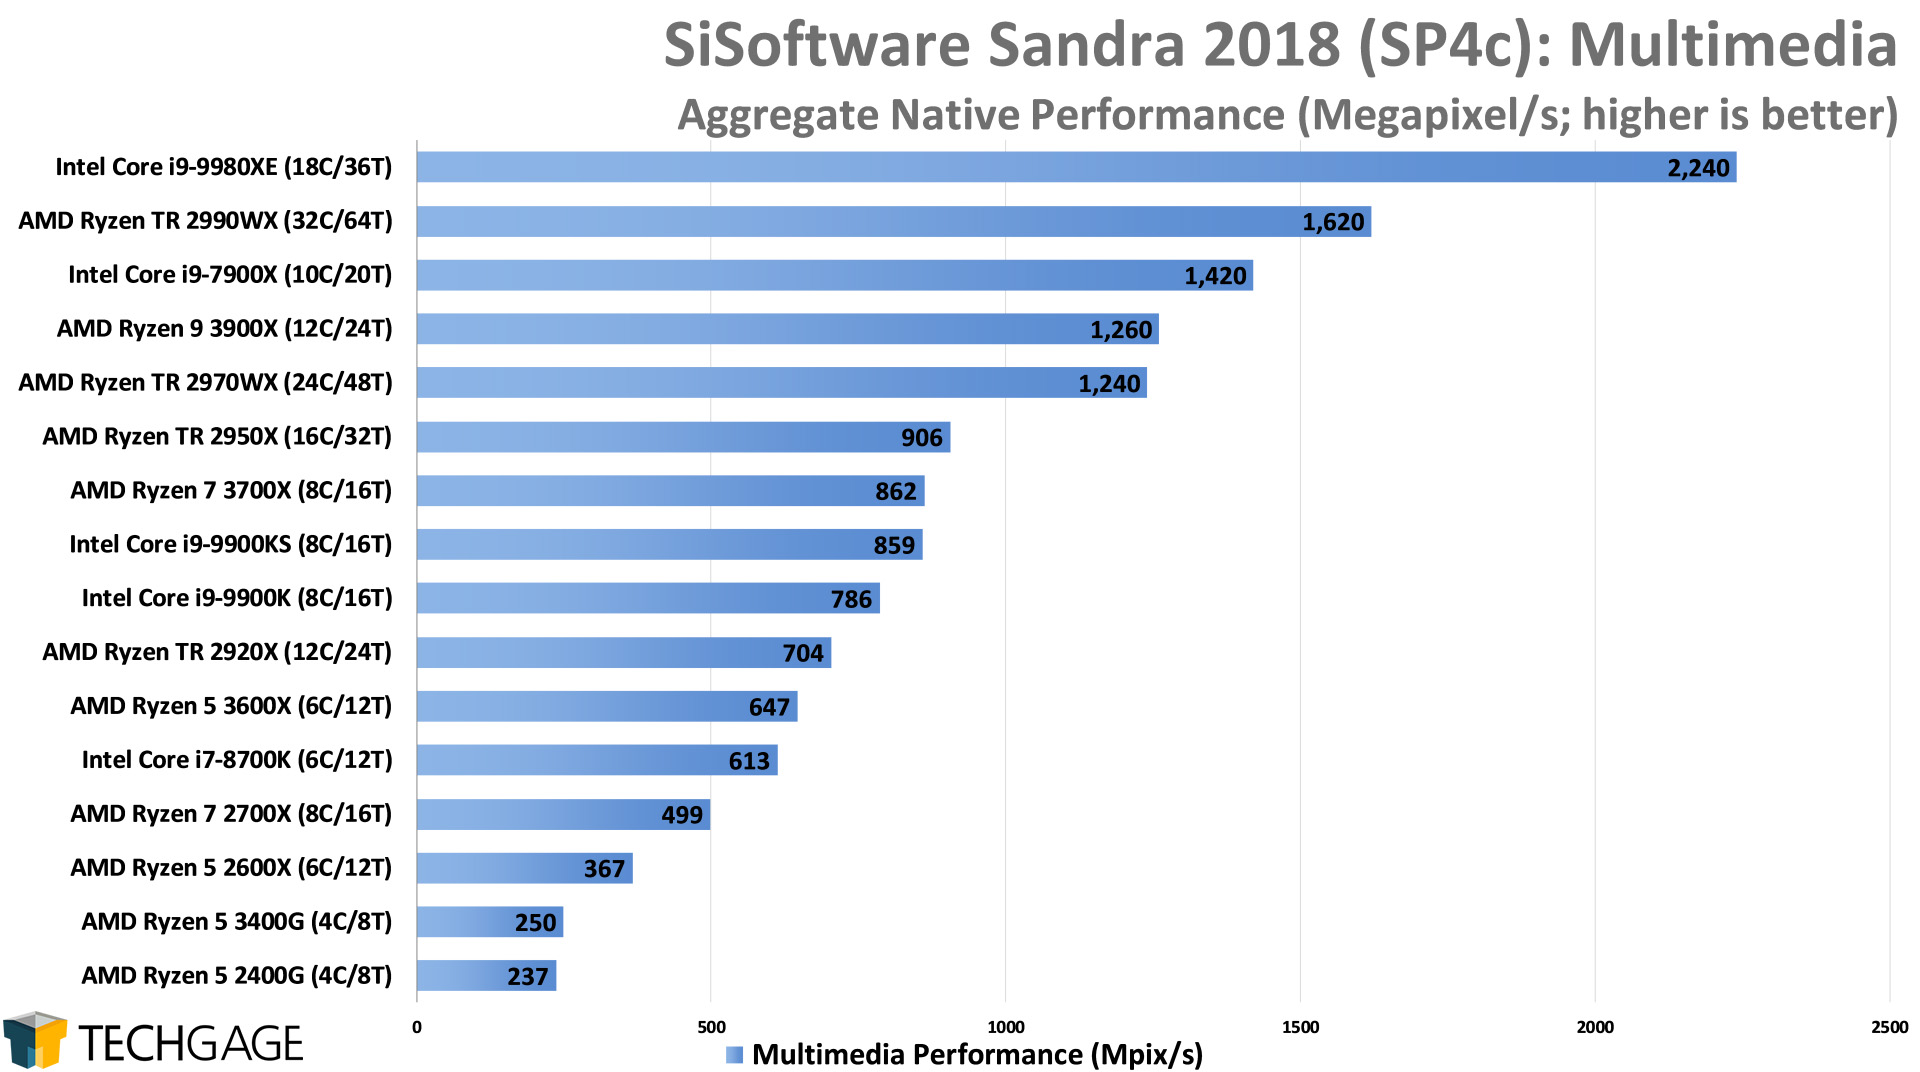 SiSoftware Sandra 2018 - Multi-media Performance (Intel Core i9-9900KS)